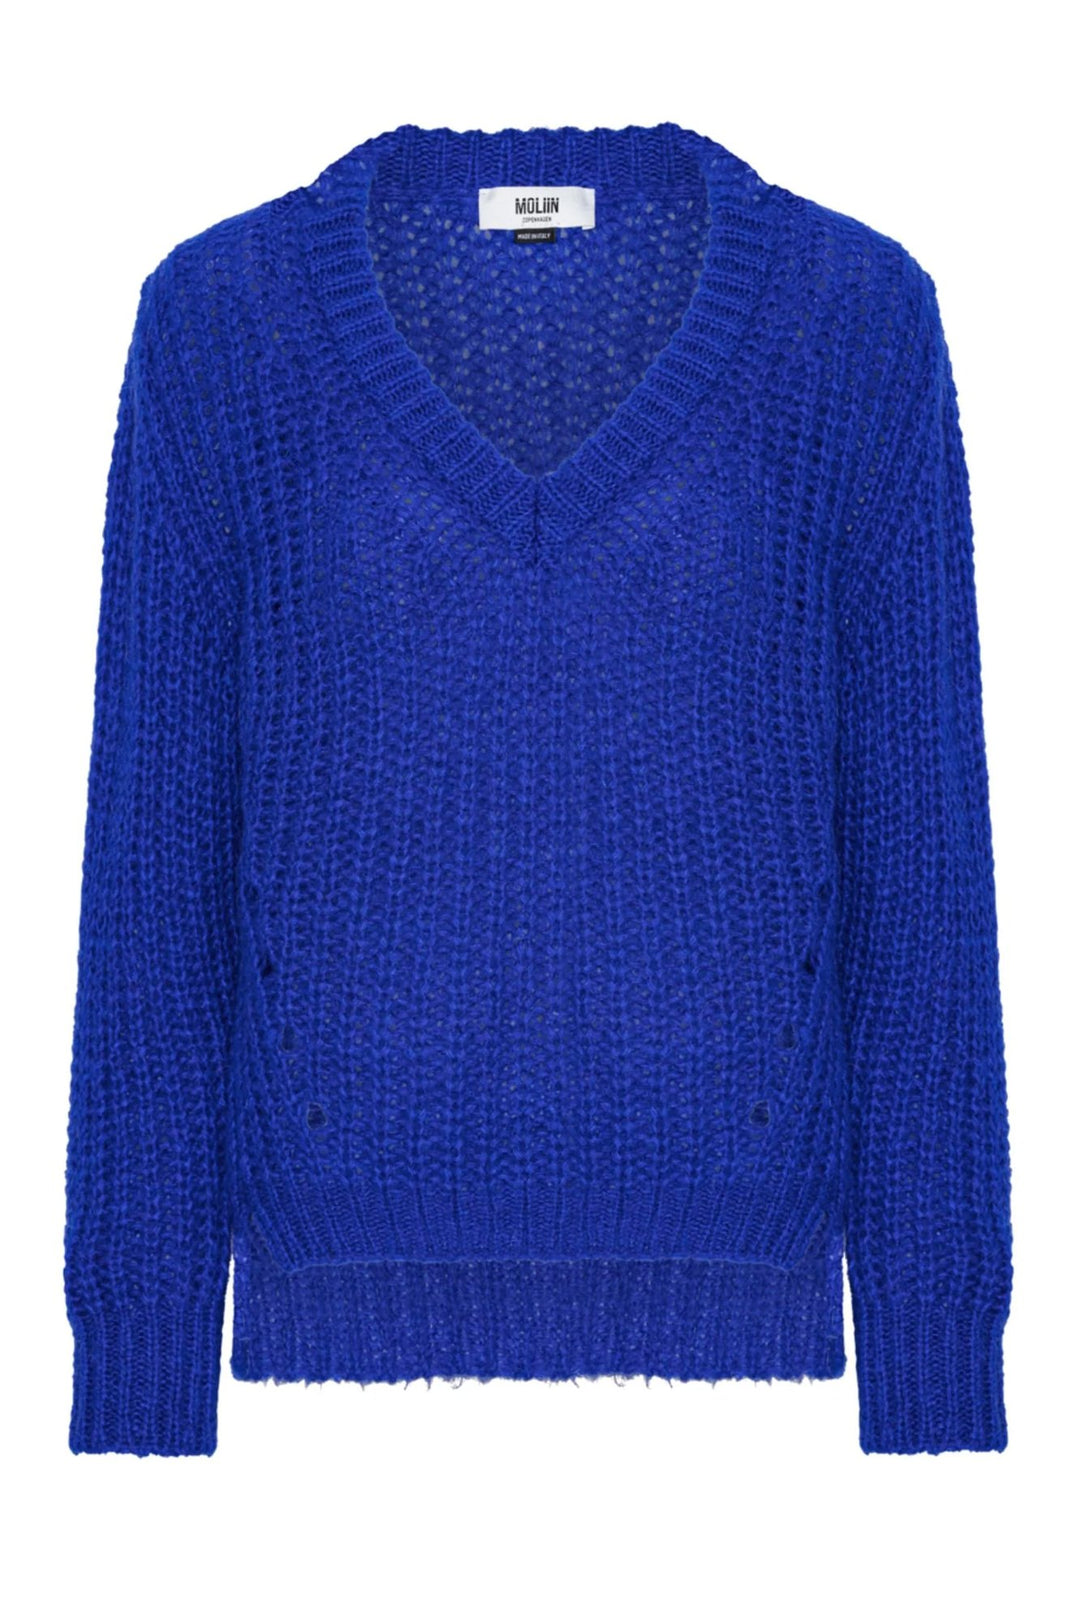 Sweater | Moliin Erika, clematis blue